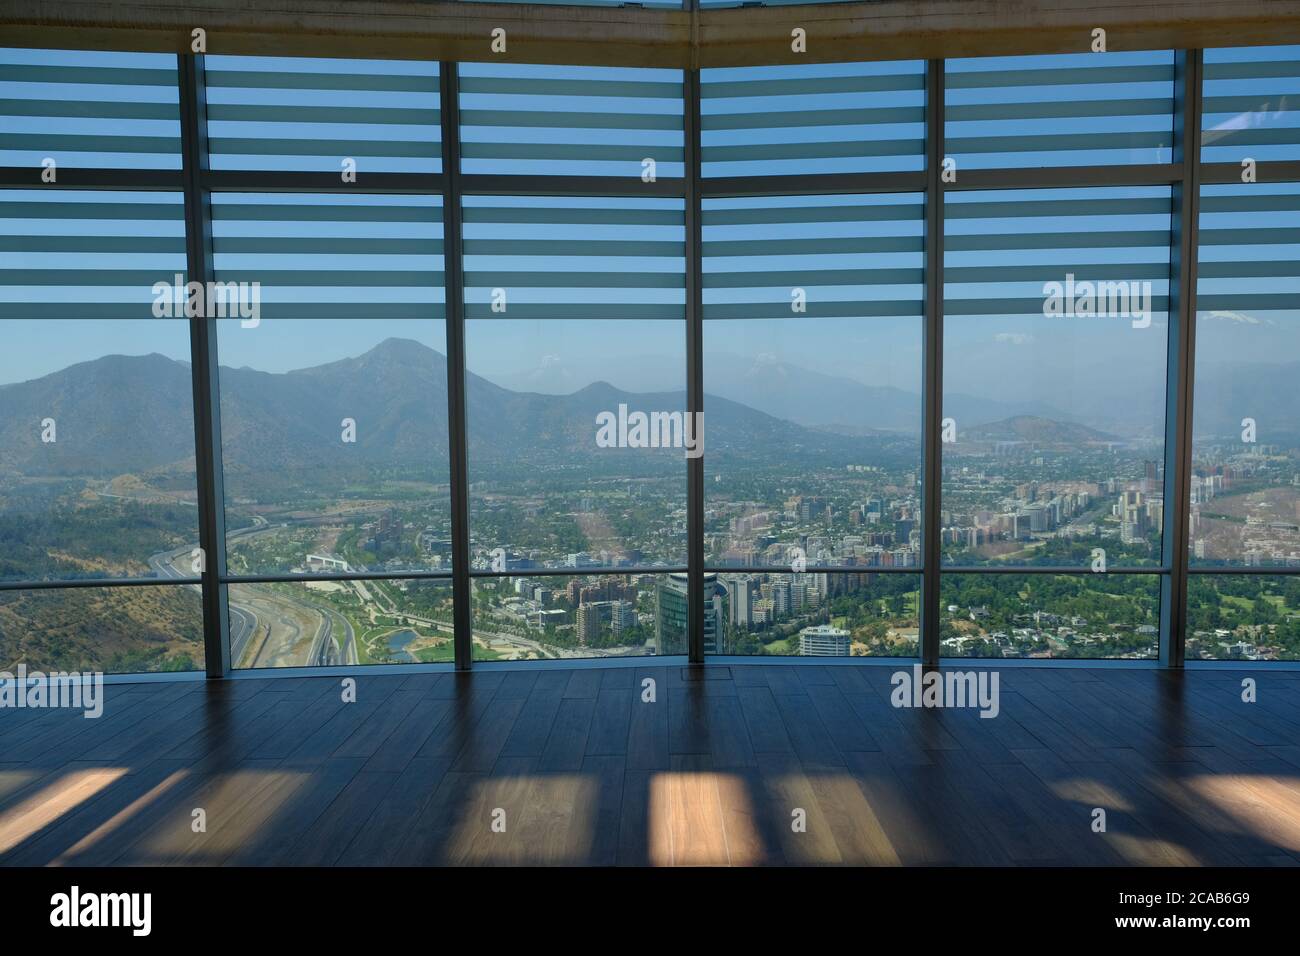 Chili Santiago - terrasse d'observation dans un ciel Costanera Banque D'Images